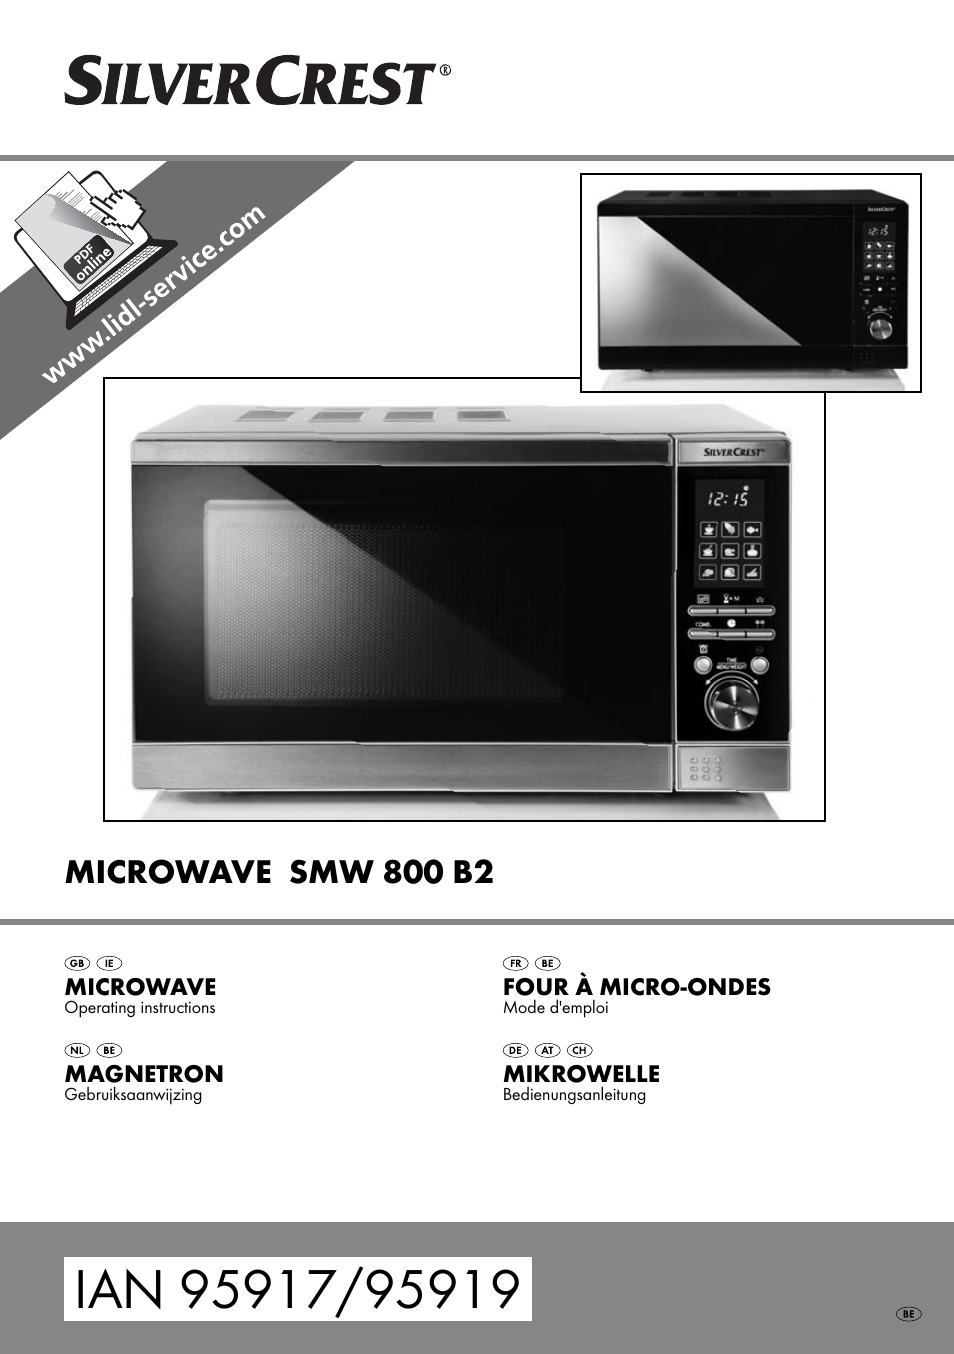 Silvercrest SMW 800 B2 User Manual | 91 pages | Also for: SMW 800 A2, SMW  800 A1